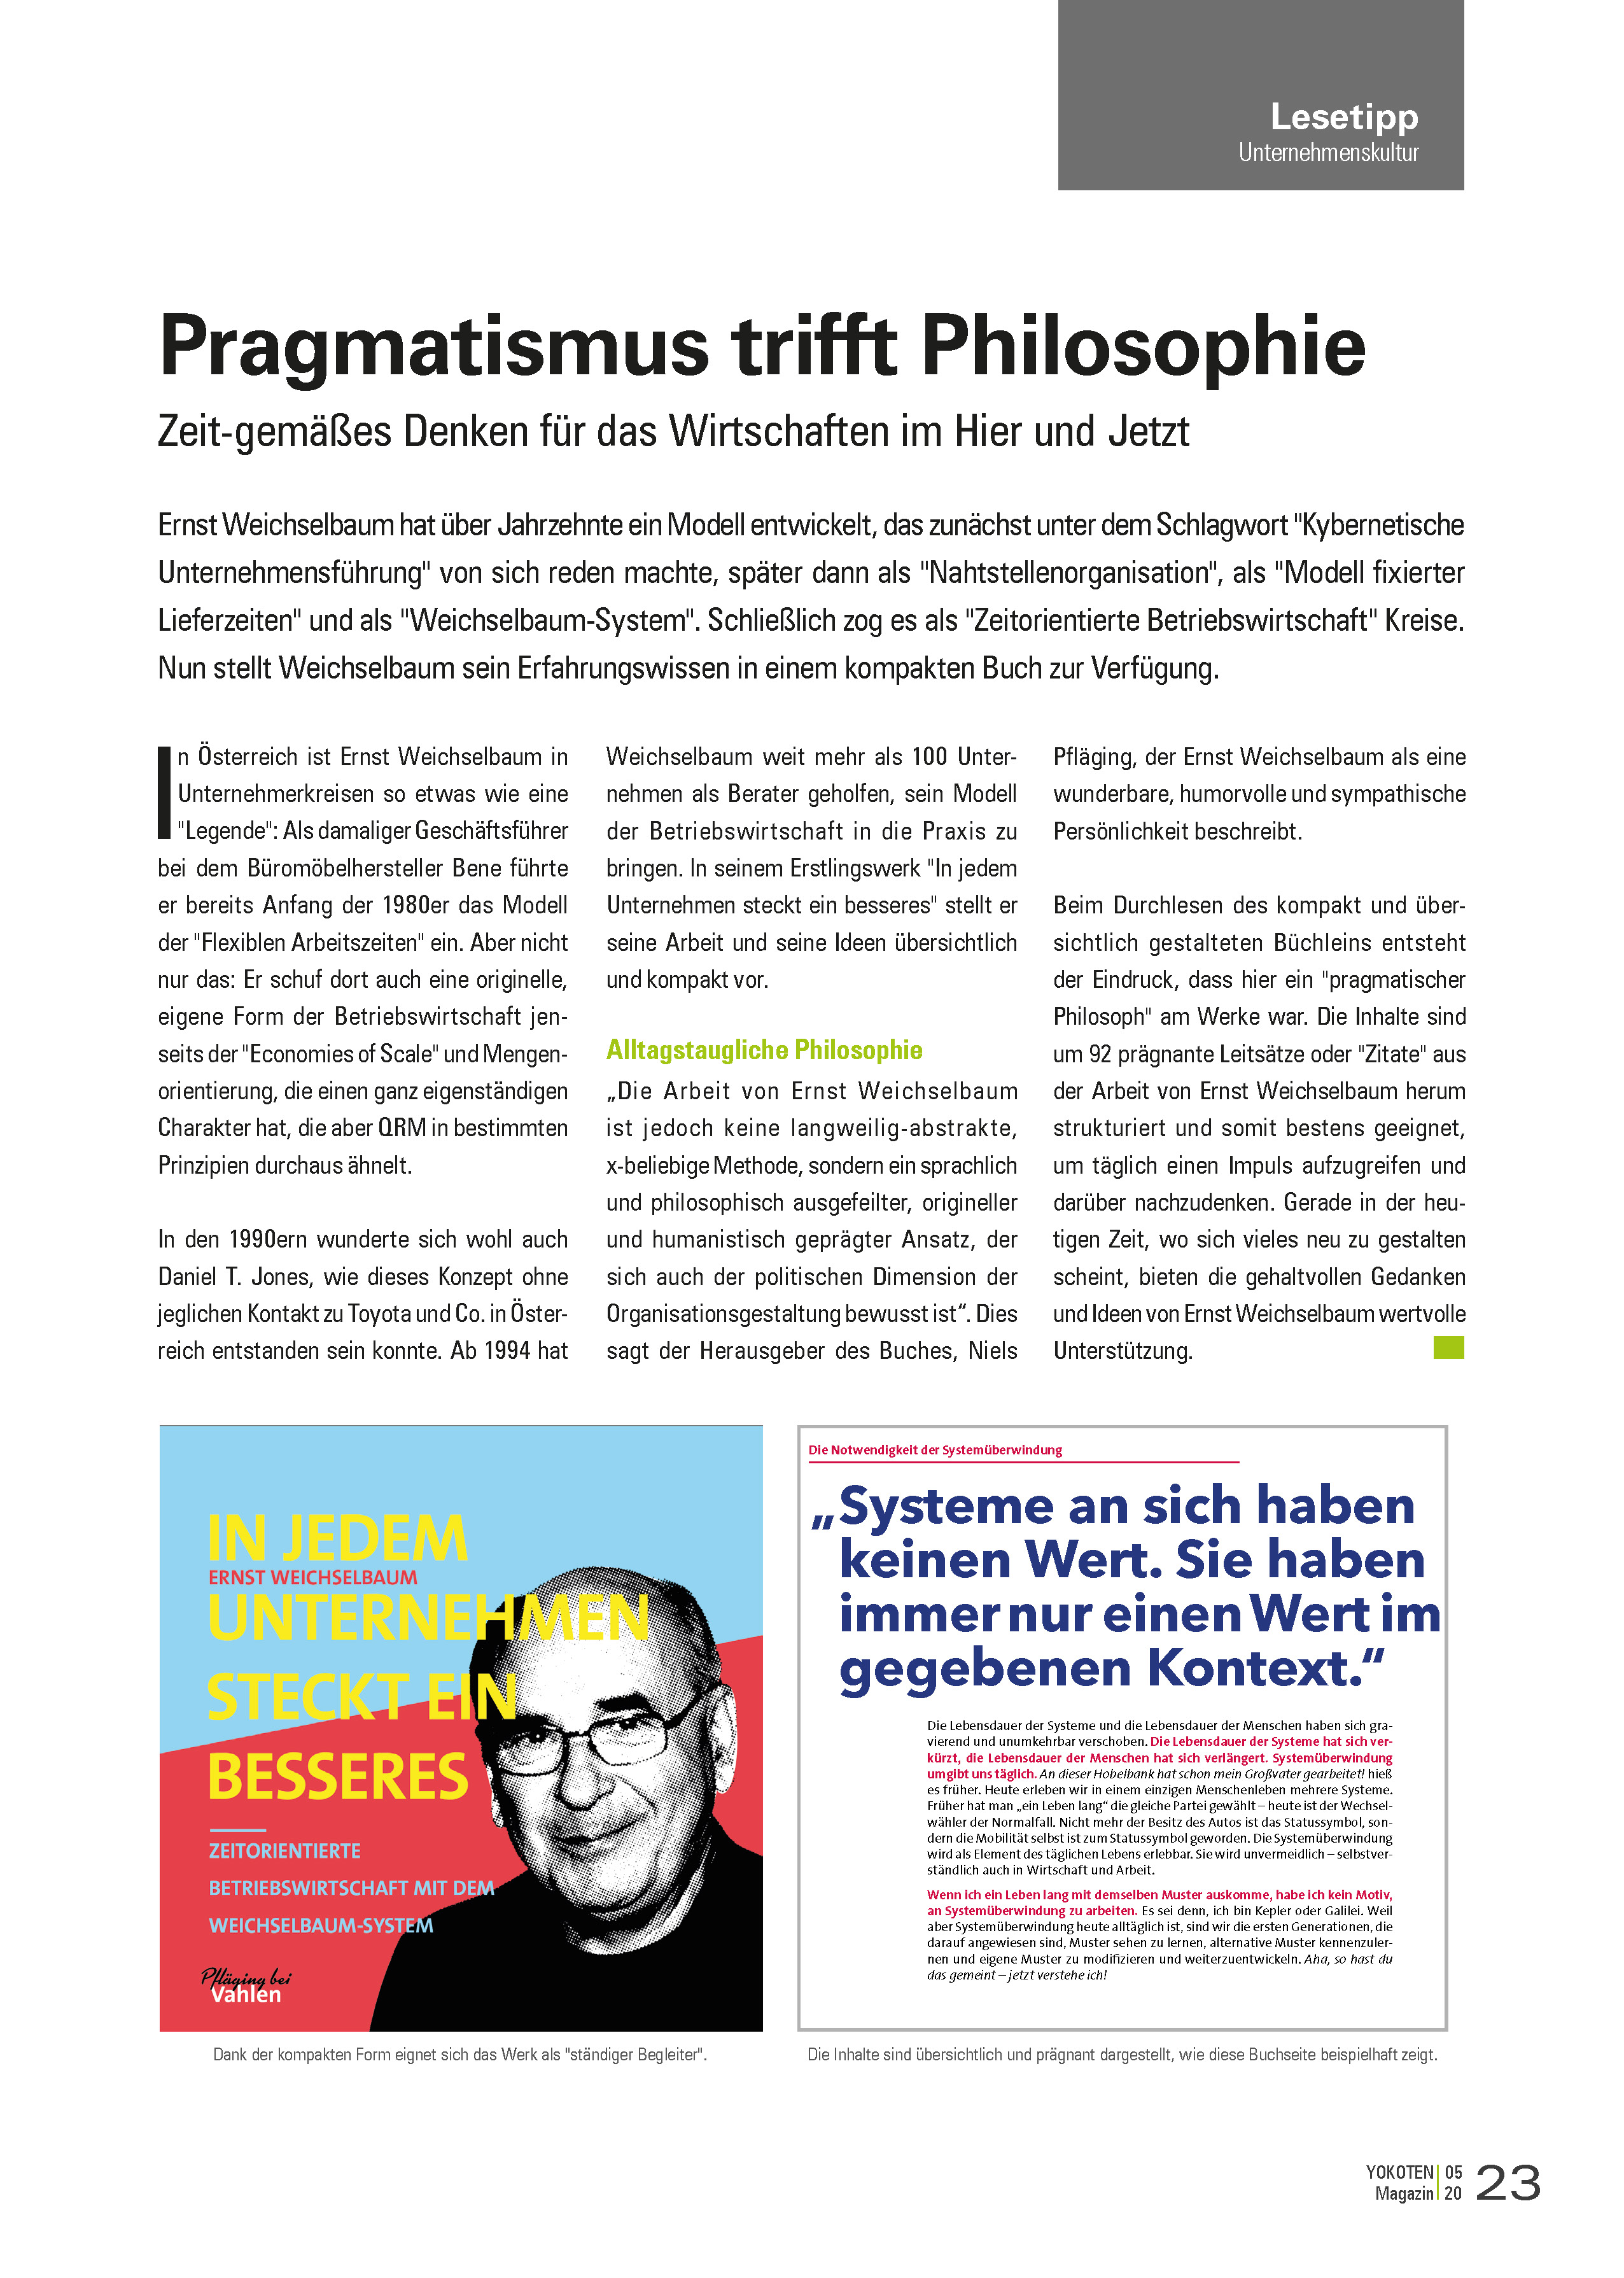 Pragmatismus trifft Philosophie - Artikel aus Fachmagazin YOKOTEN 2020-05